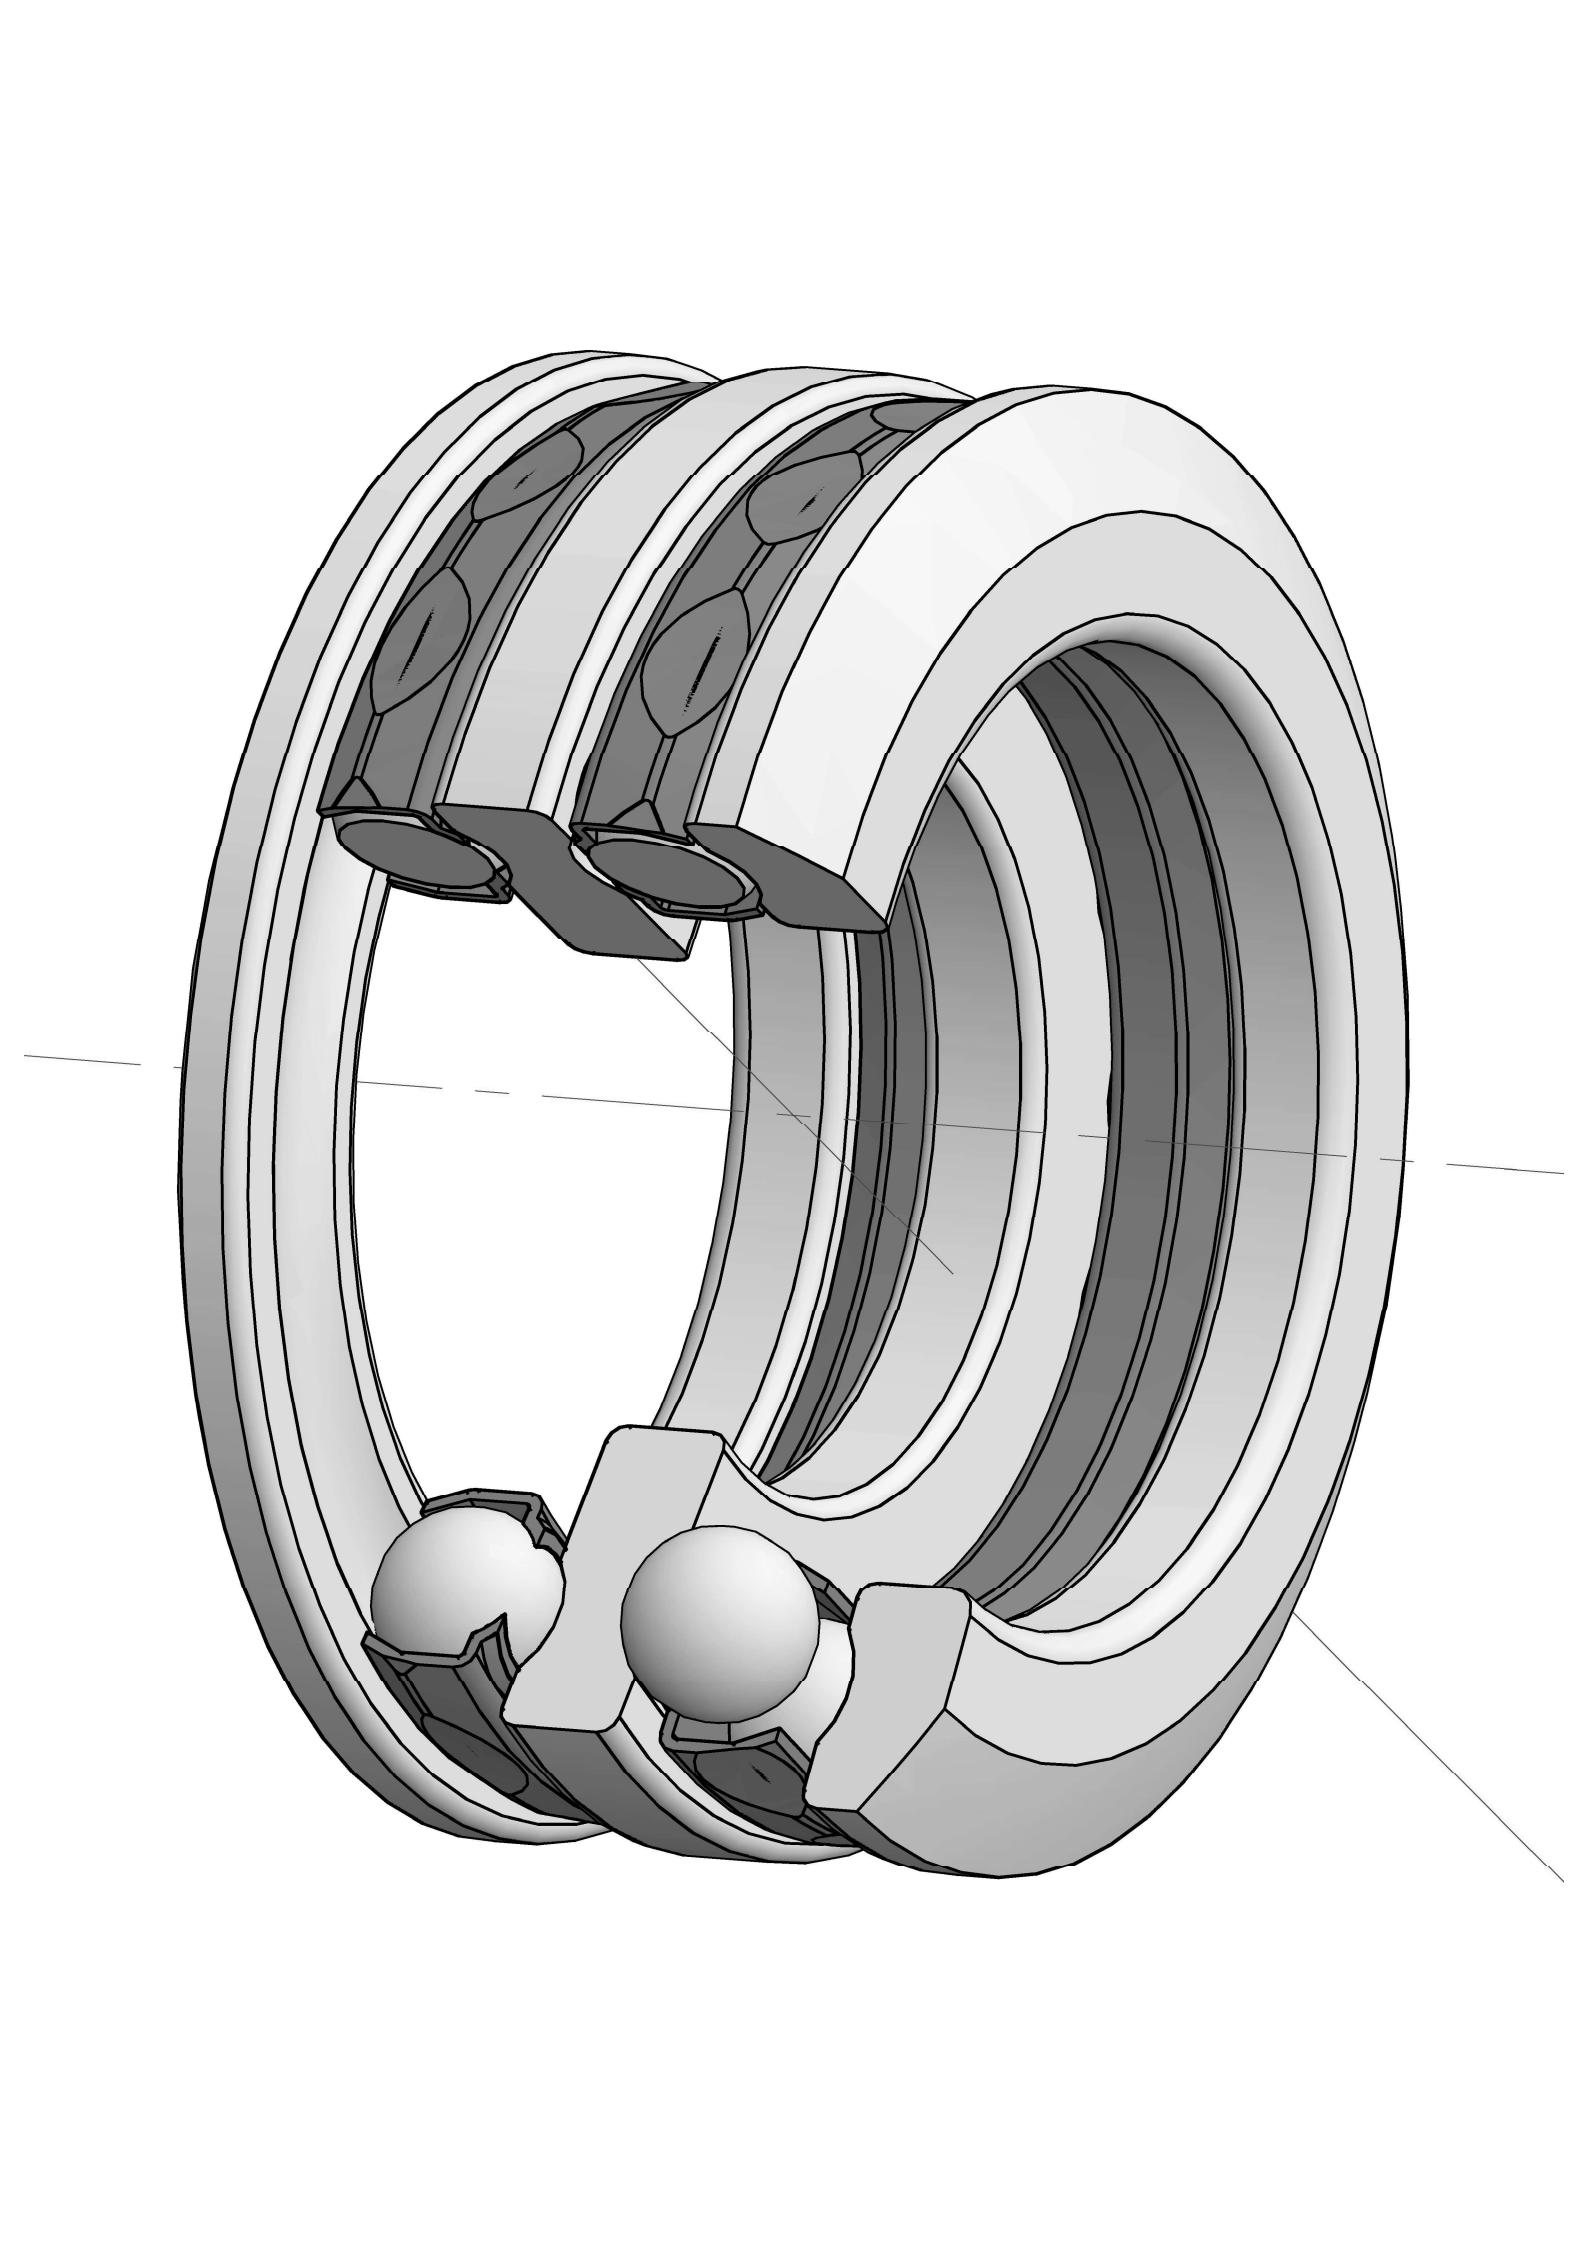 54216 + U216 Double direction thrust ball bearings